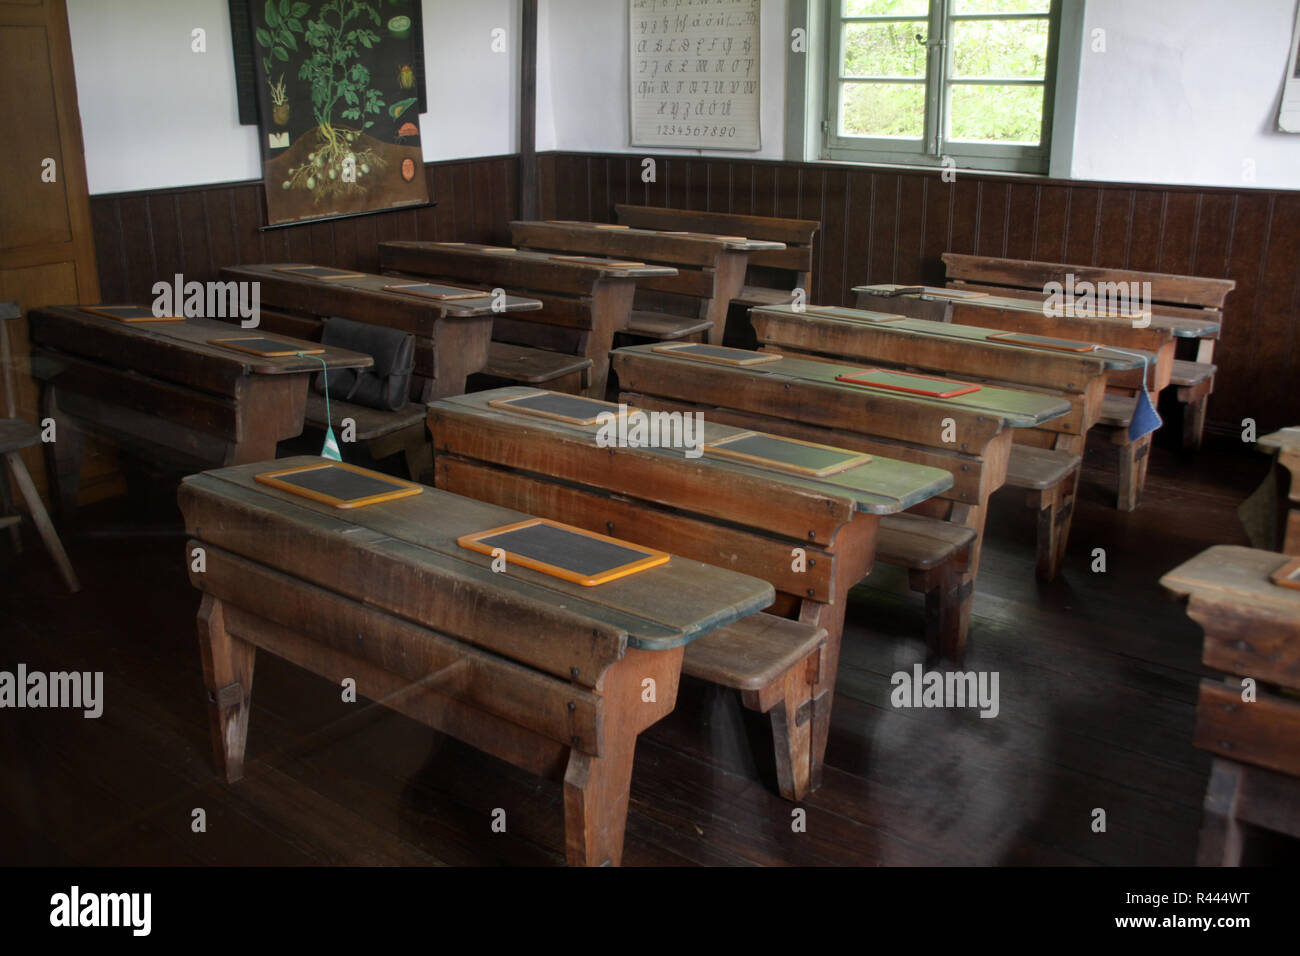 Old School Desks In A Classroom Stock Photo 226285076 Alamy